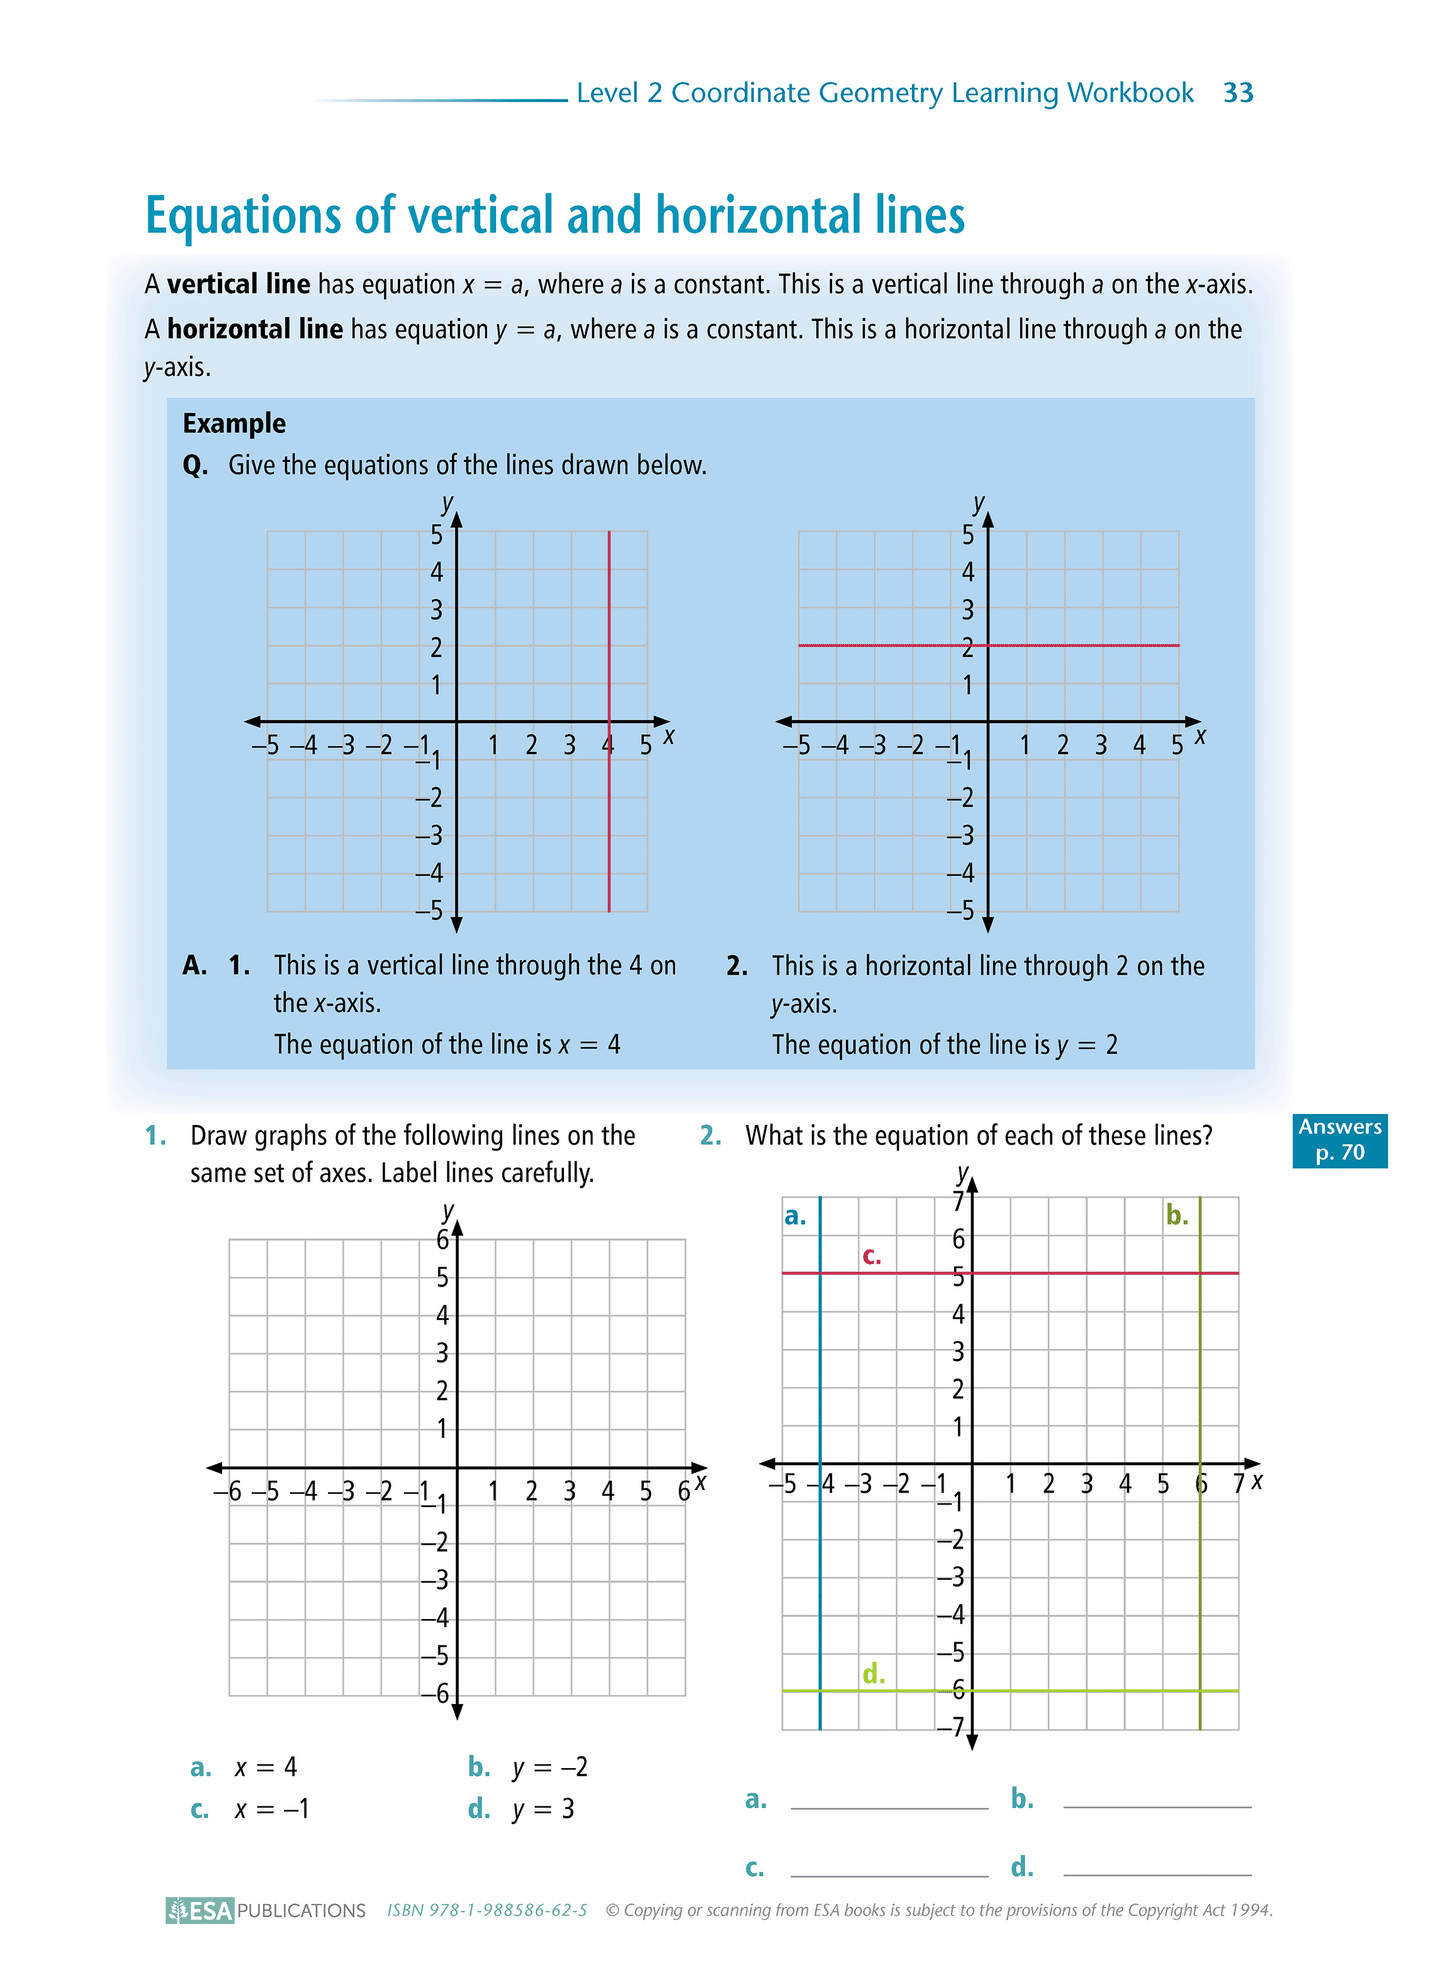 Level 2 Coordinate Geometry 2.1 Learning Workbook